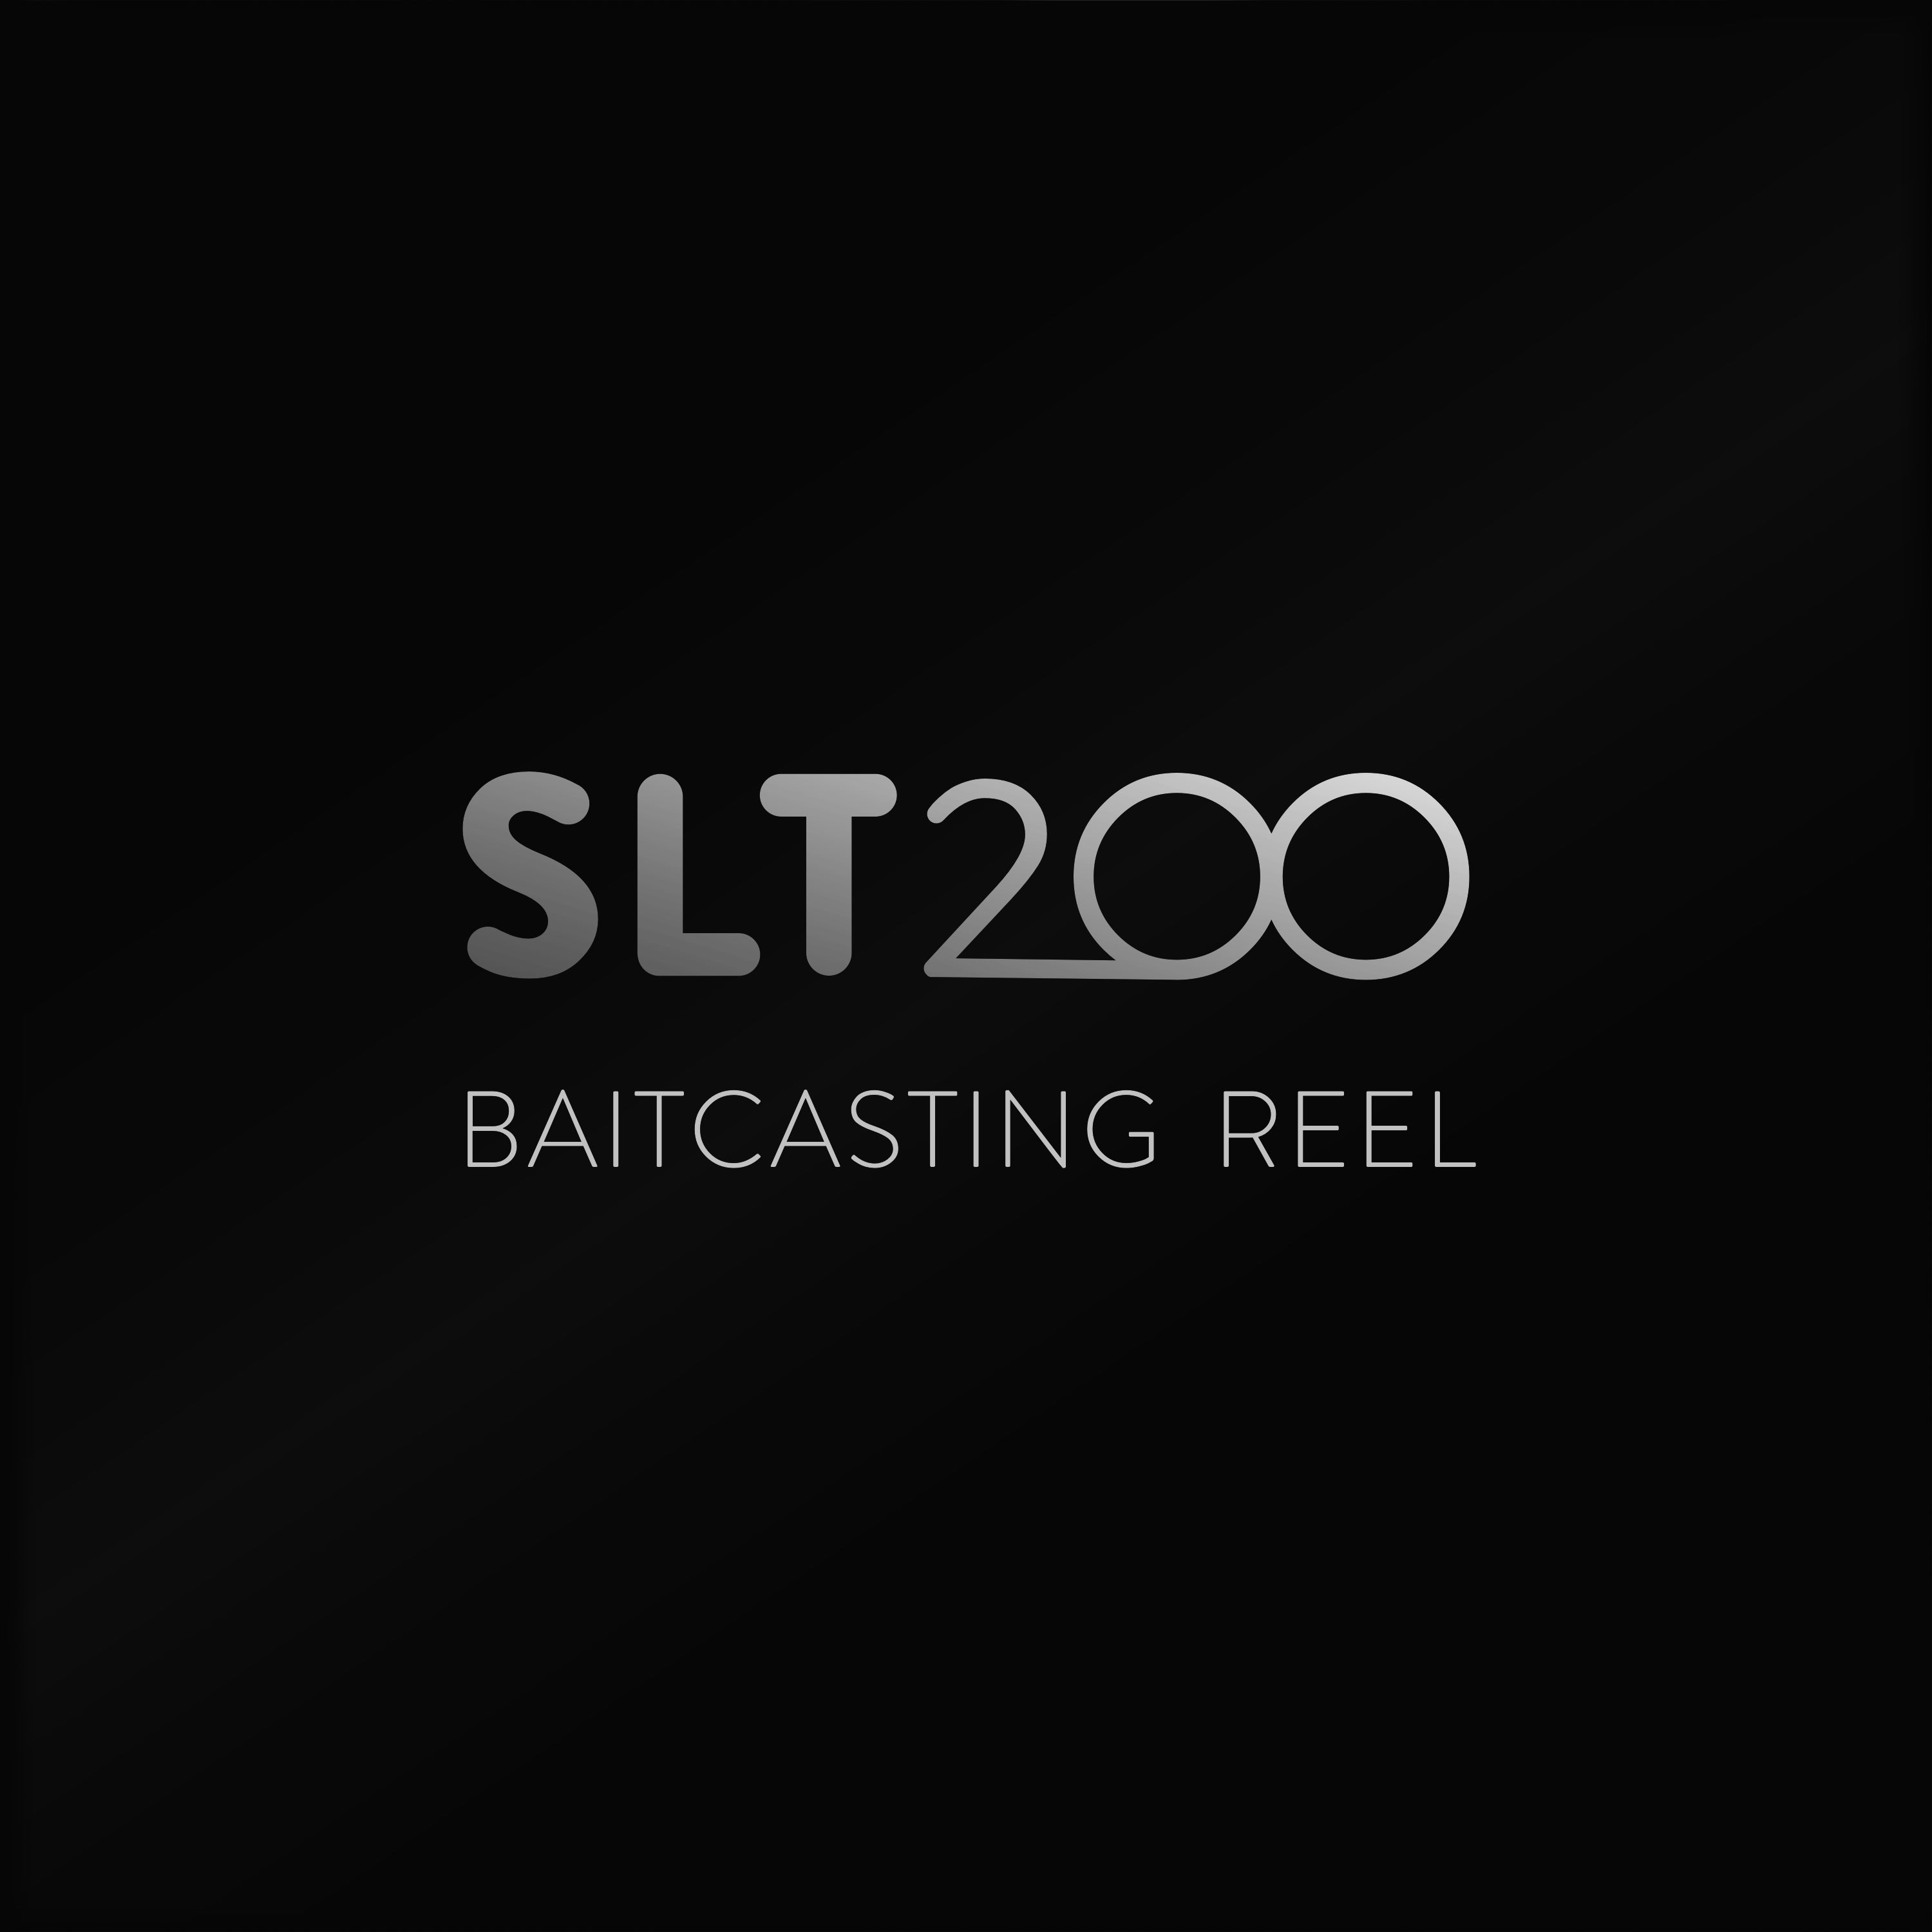 SLT200 All-Water Baitcasting Reel